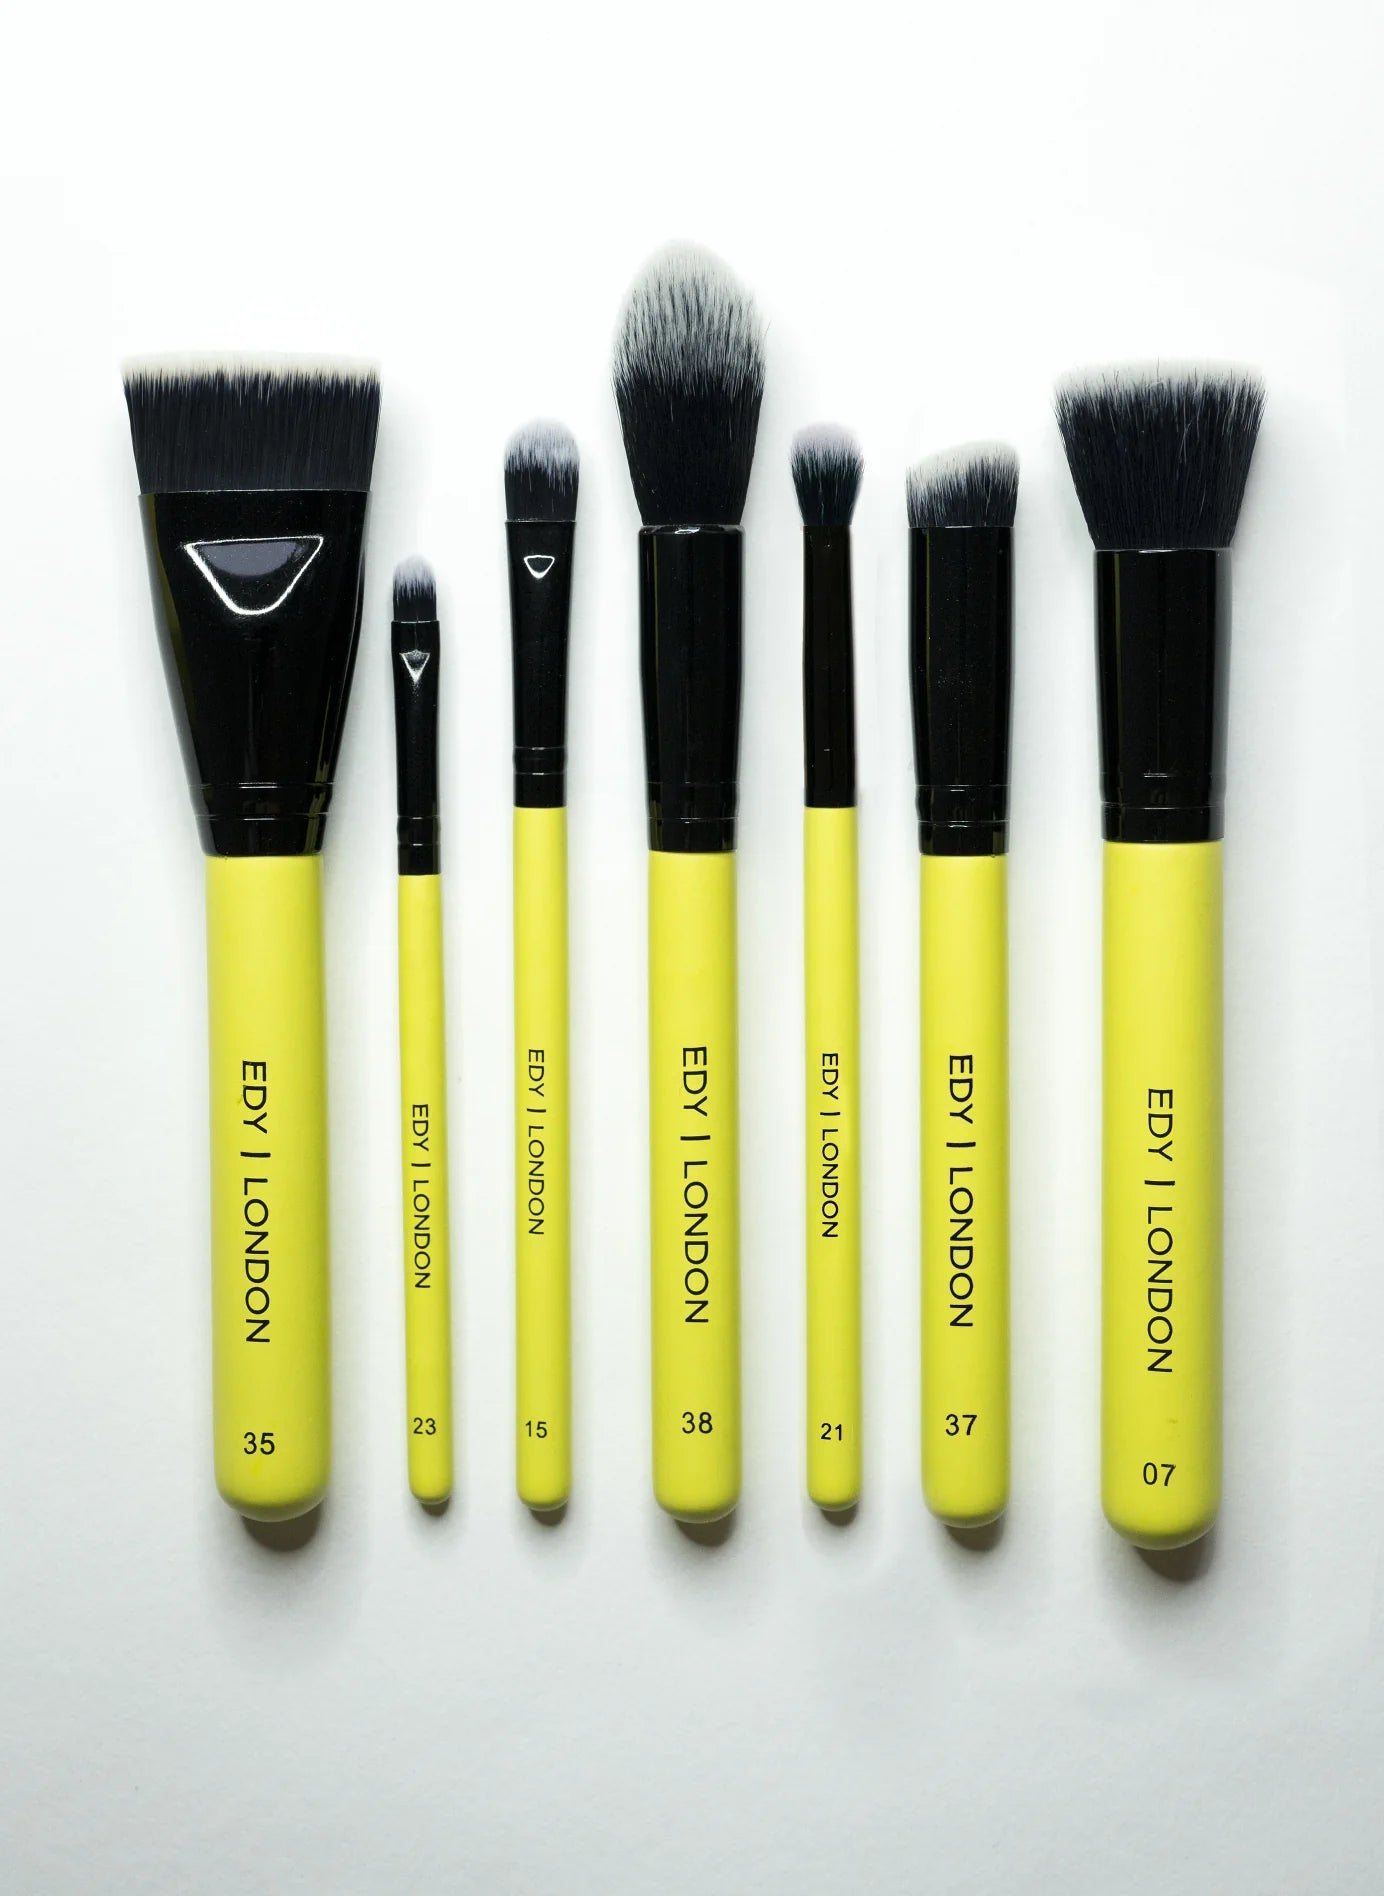 Like A Pro Set 511 Make-up Brush EDY LONDON Lemon   - EDY LONDON PRODUCTS UK - The Best Makeup Brushes - shop.edy.london